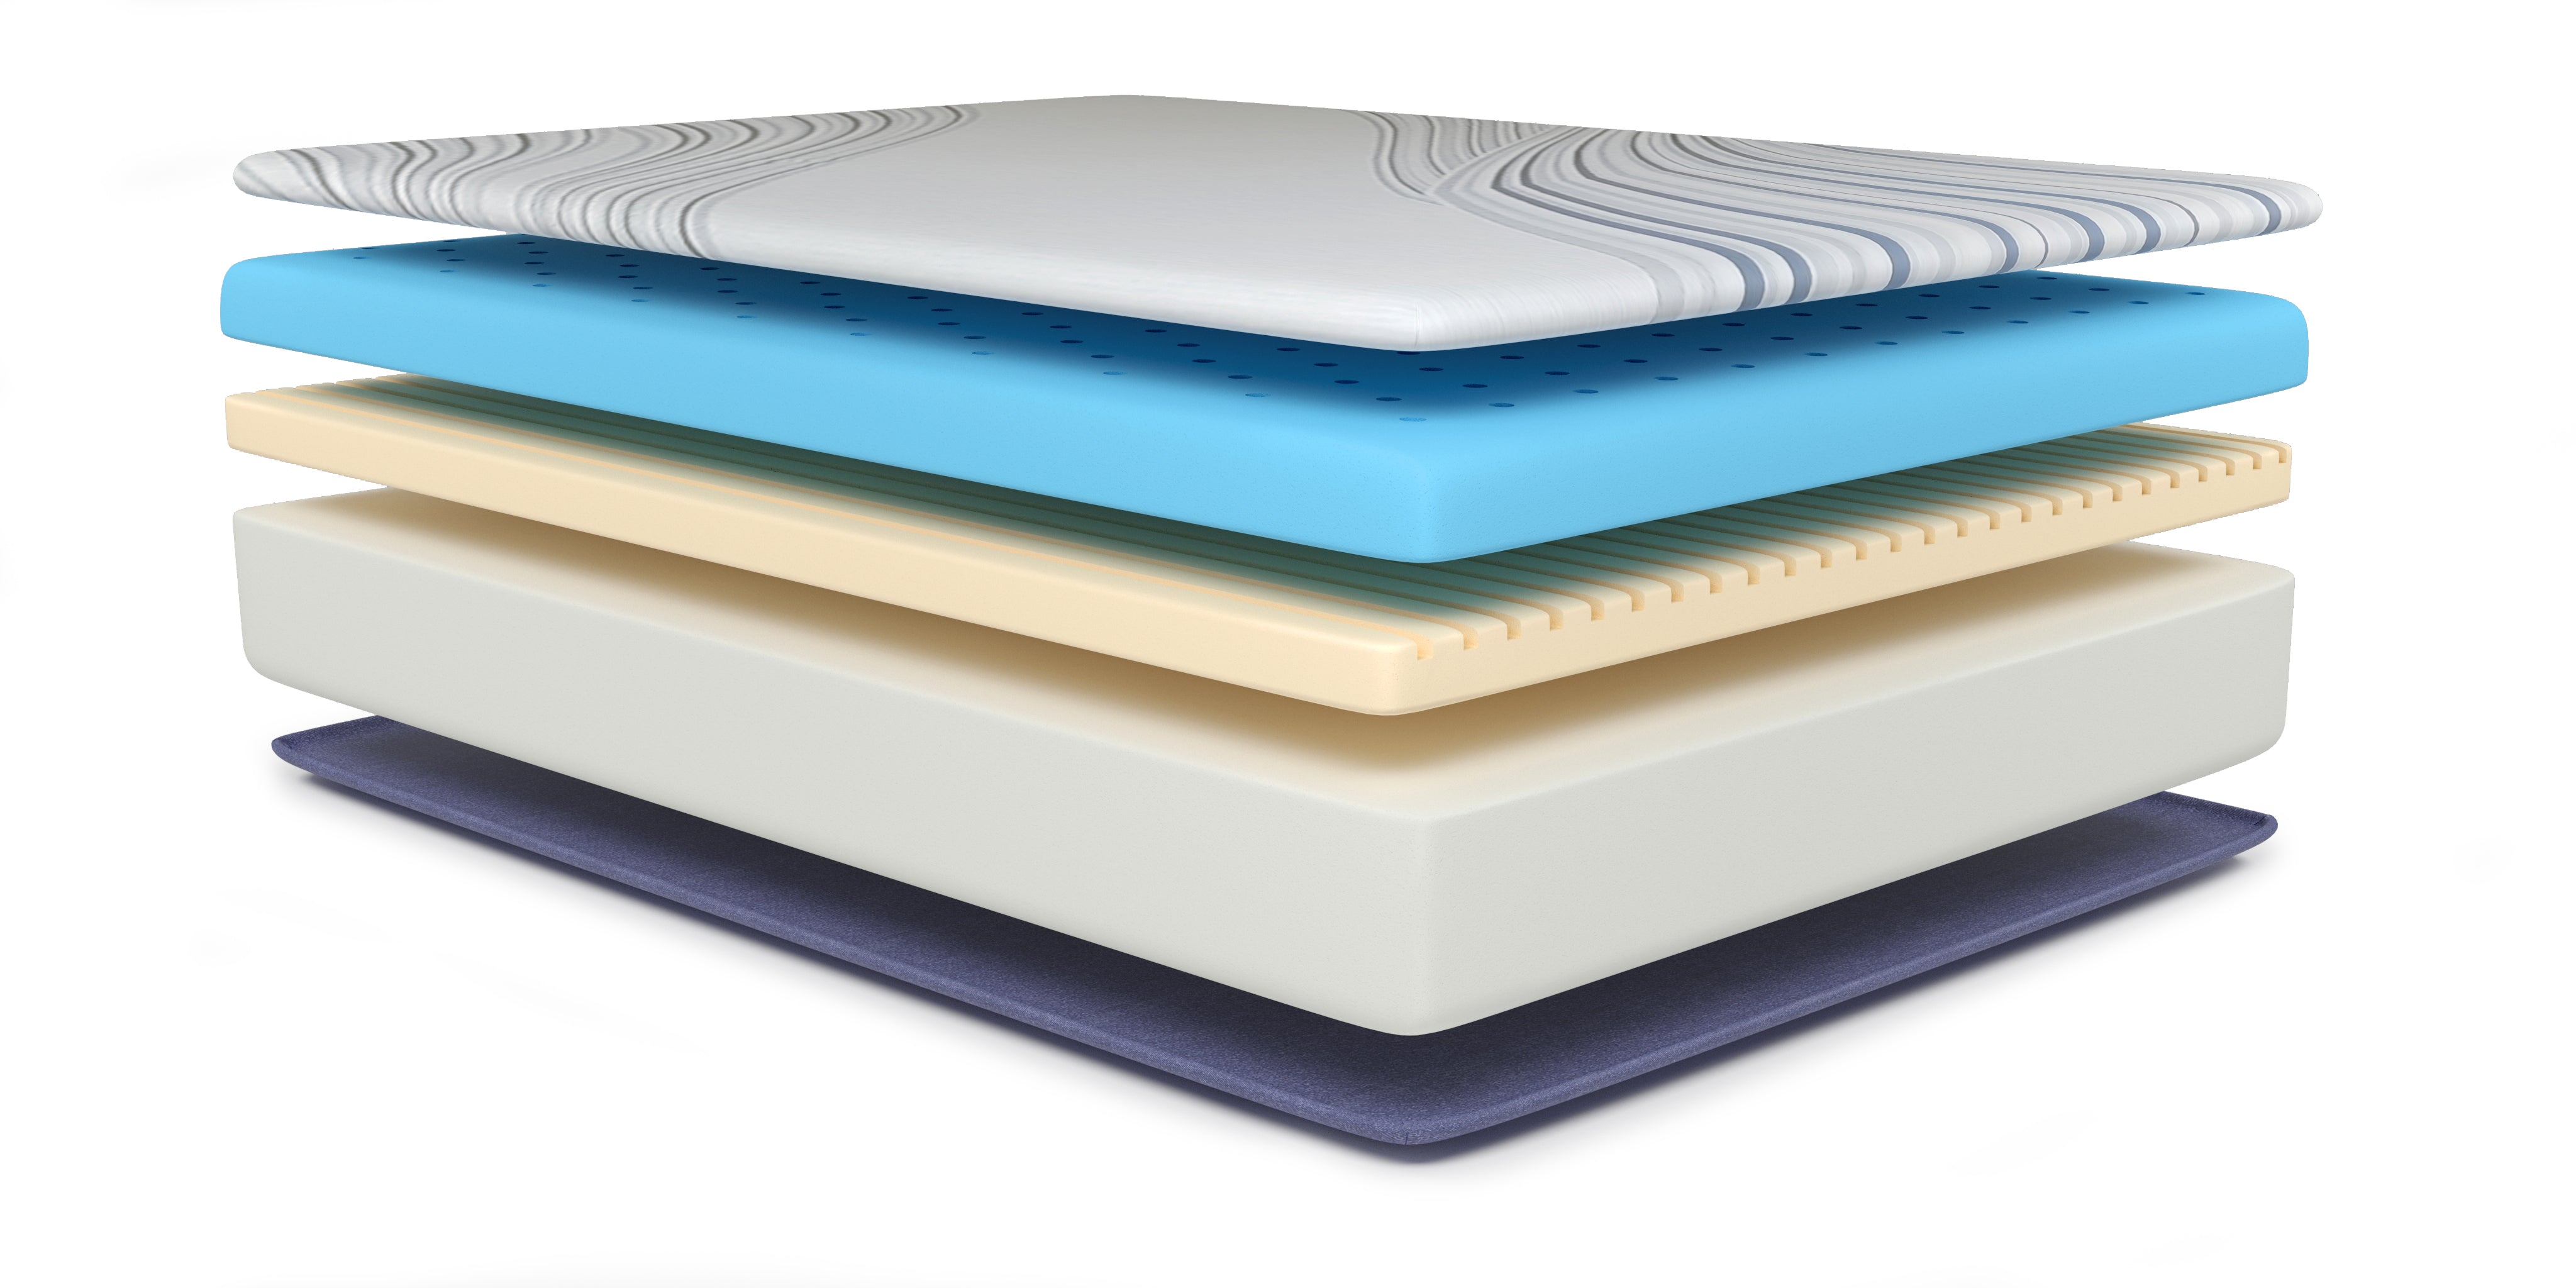 homedics restore 11 gel memory foam mattress